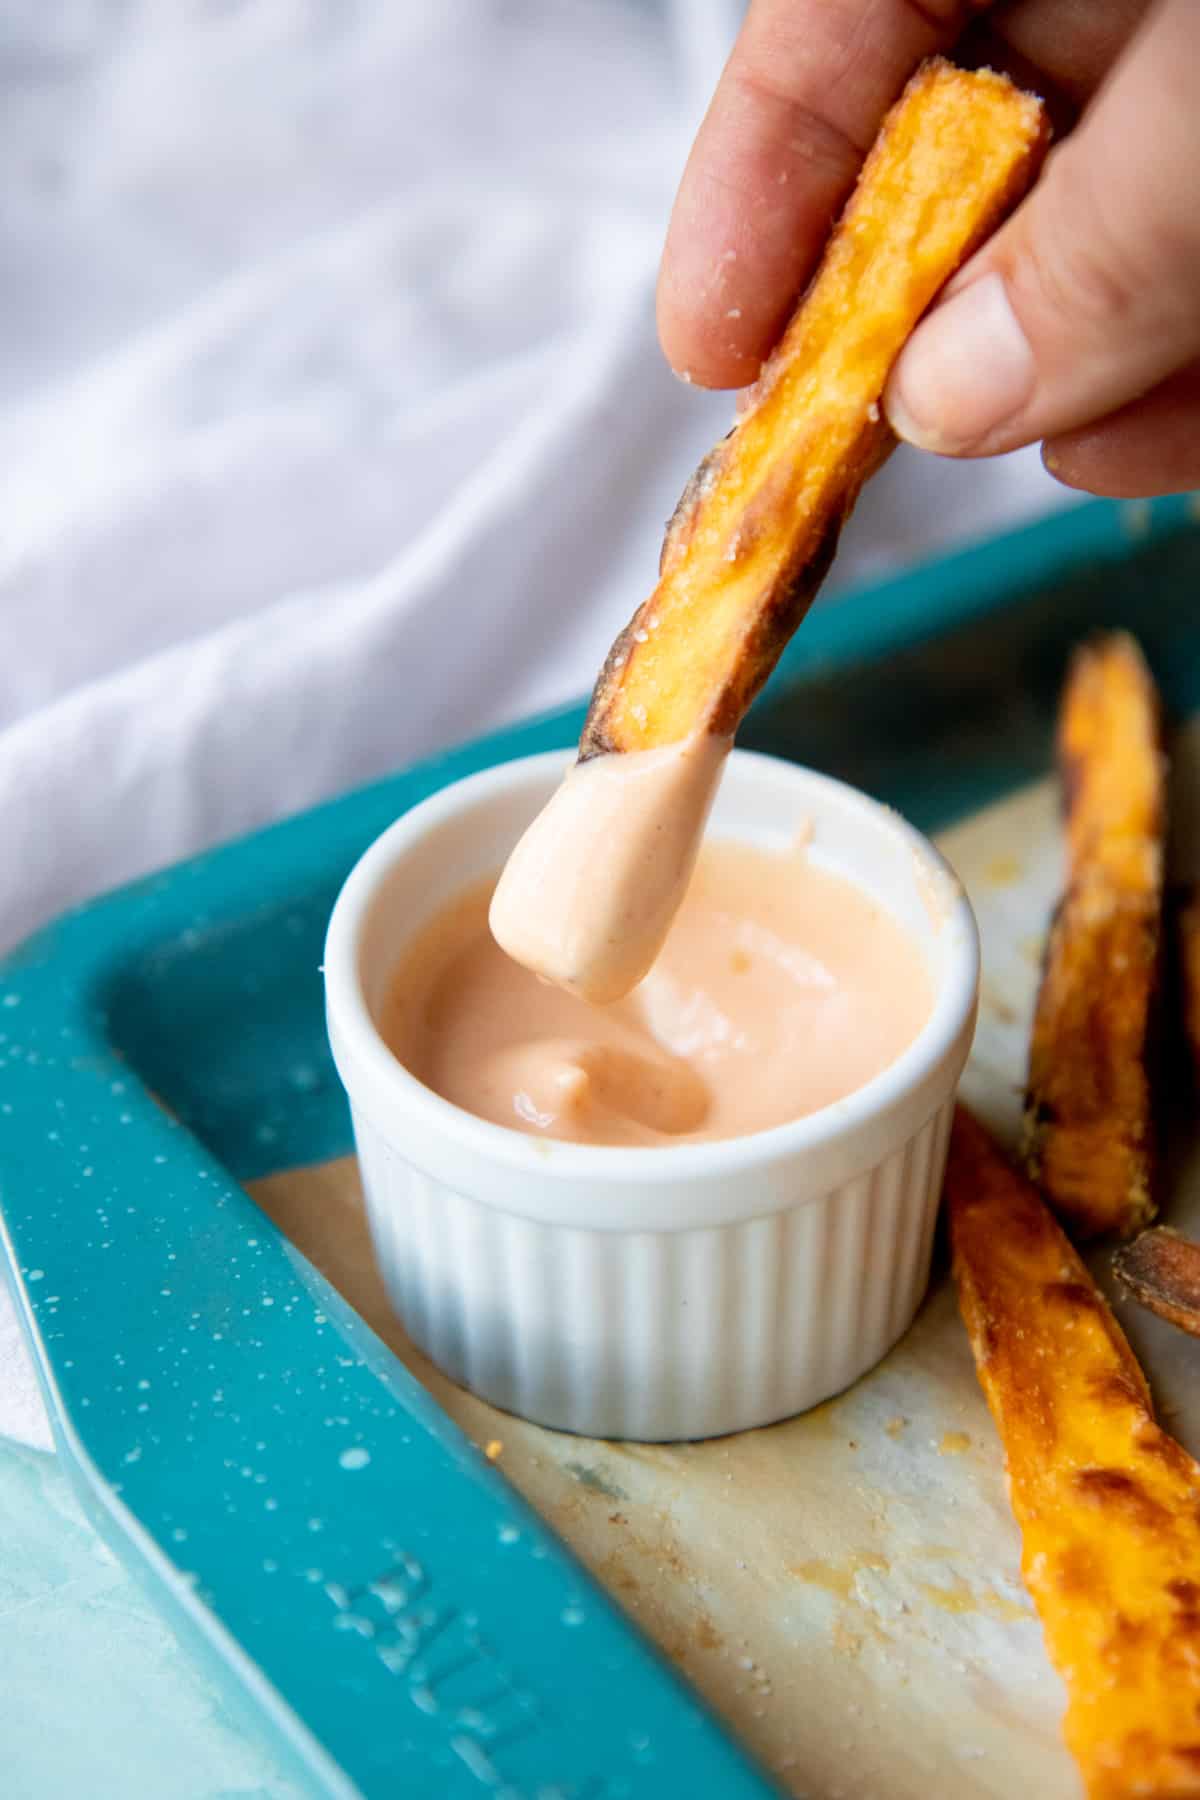 A sweet potato fry dips into a small ramekin of dipping sauce.